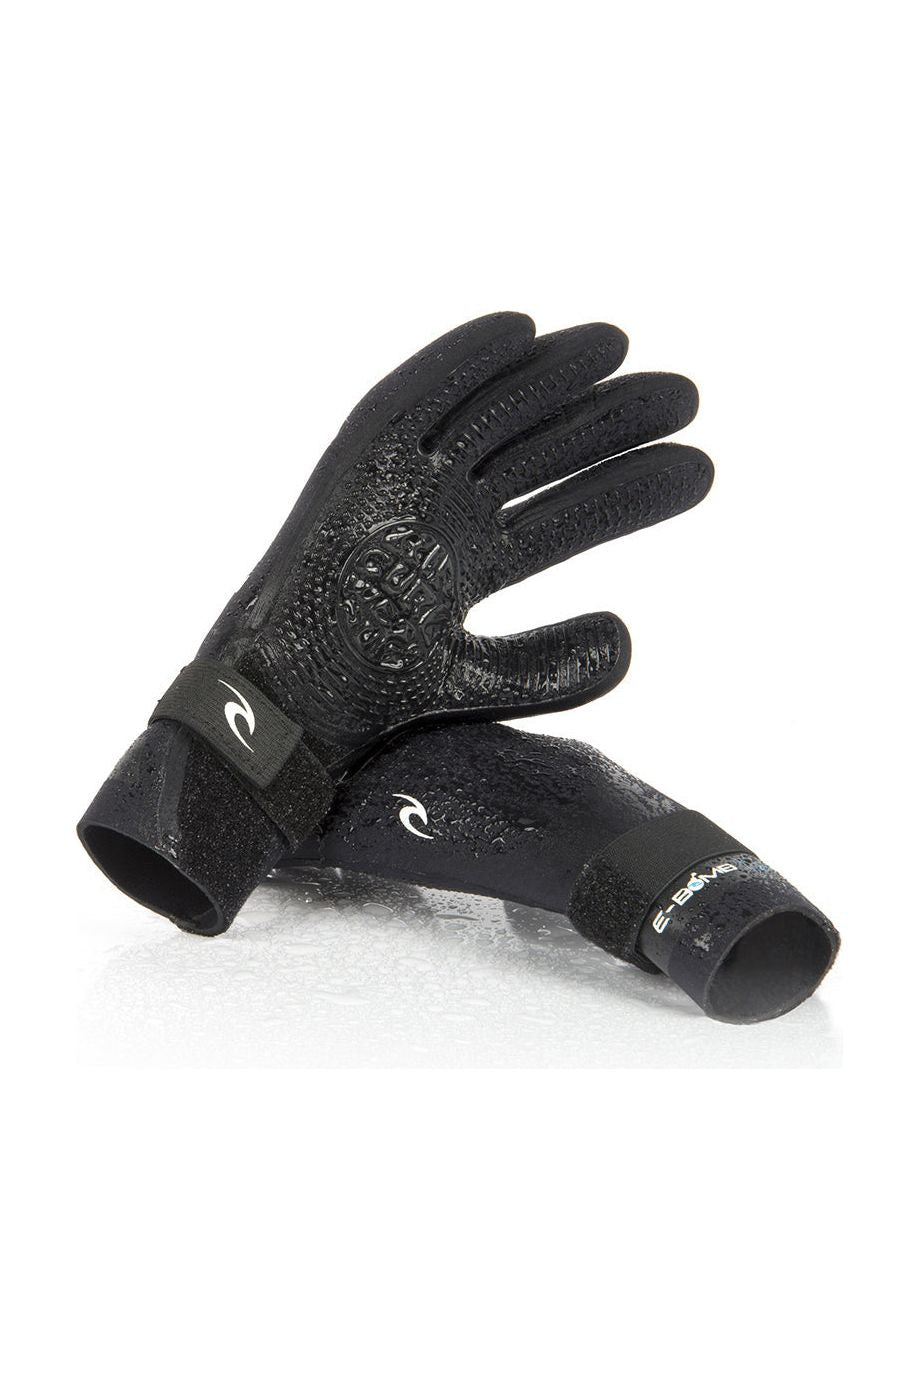 E Bomb 2mm 5 Finger Glove